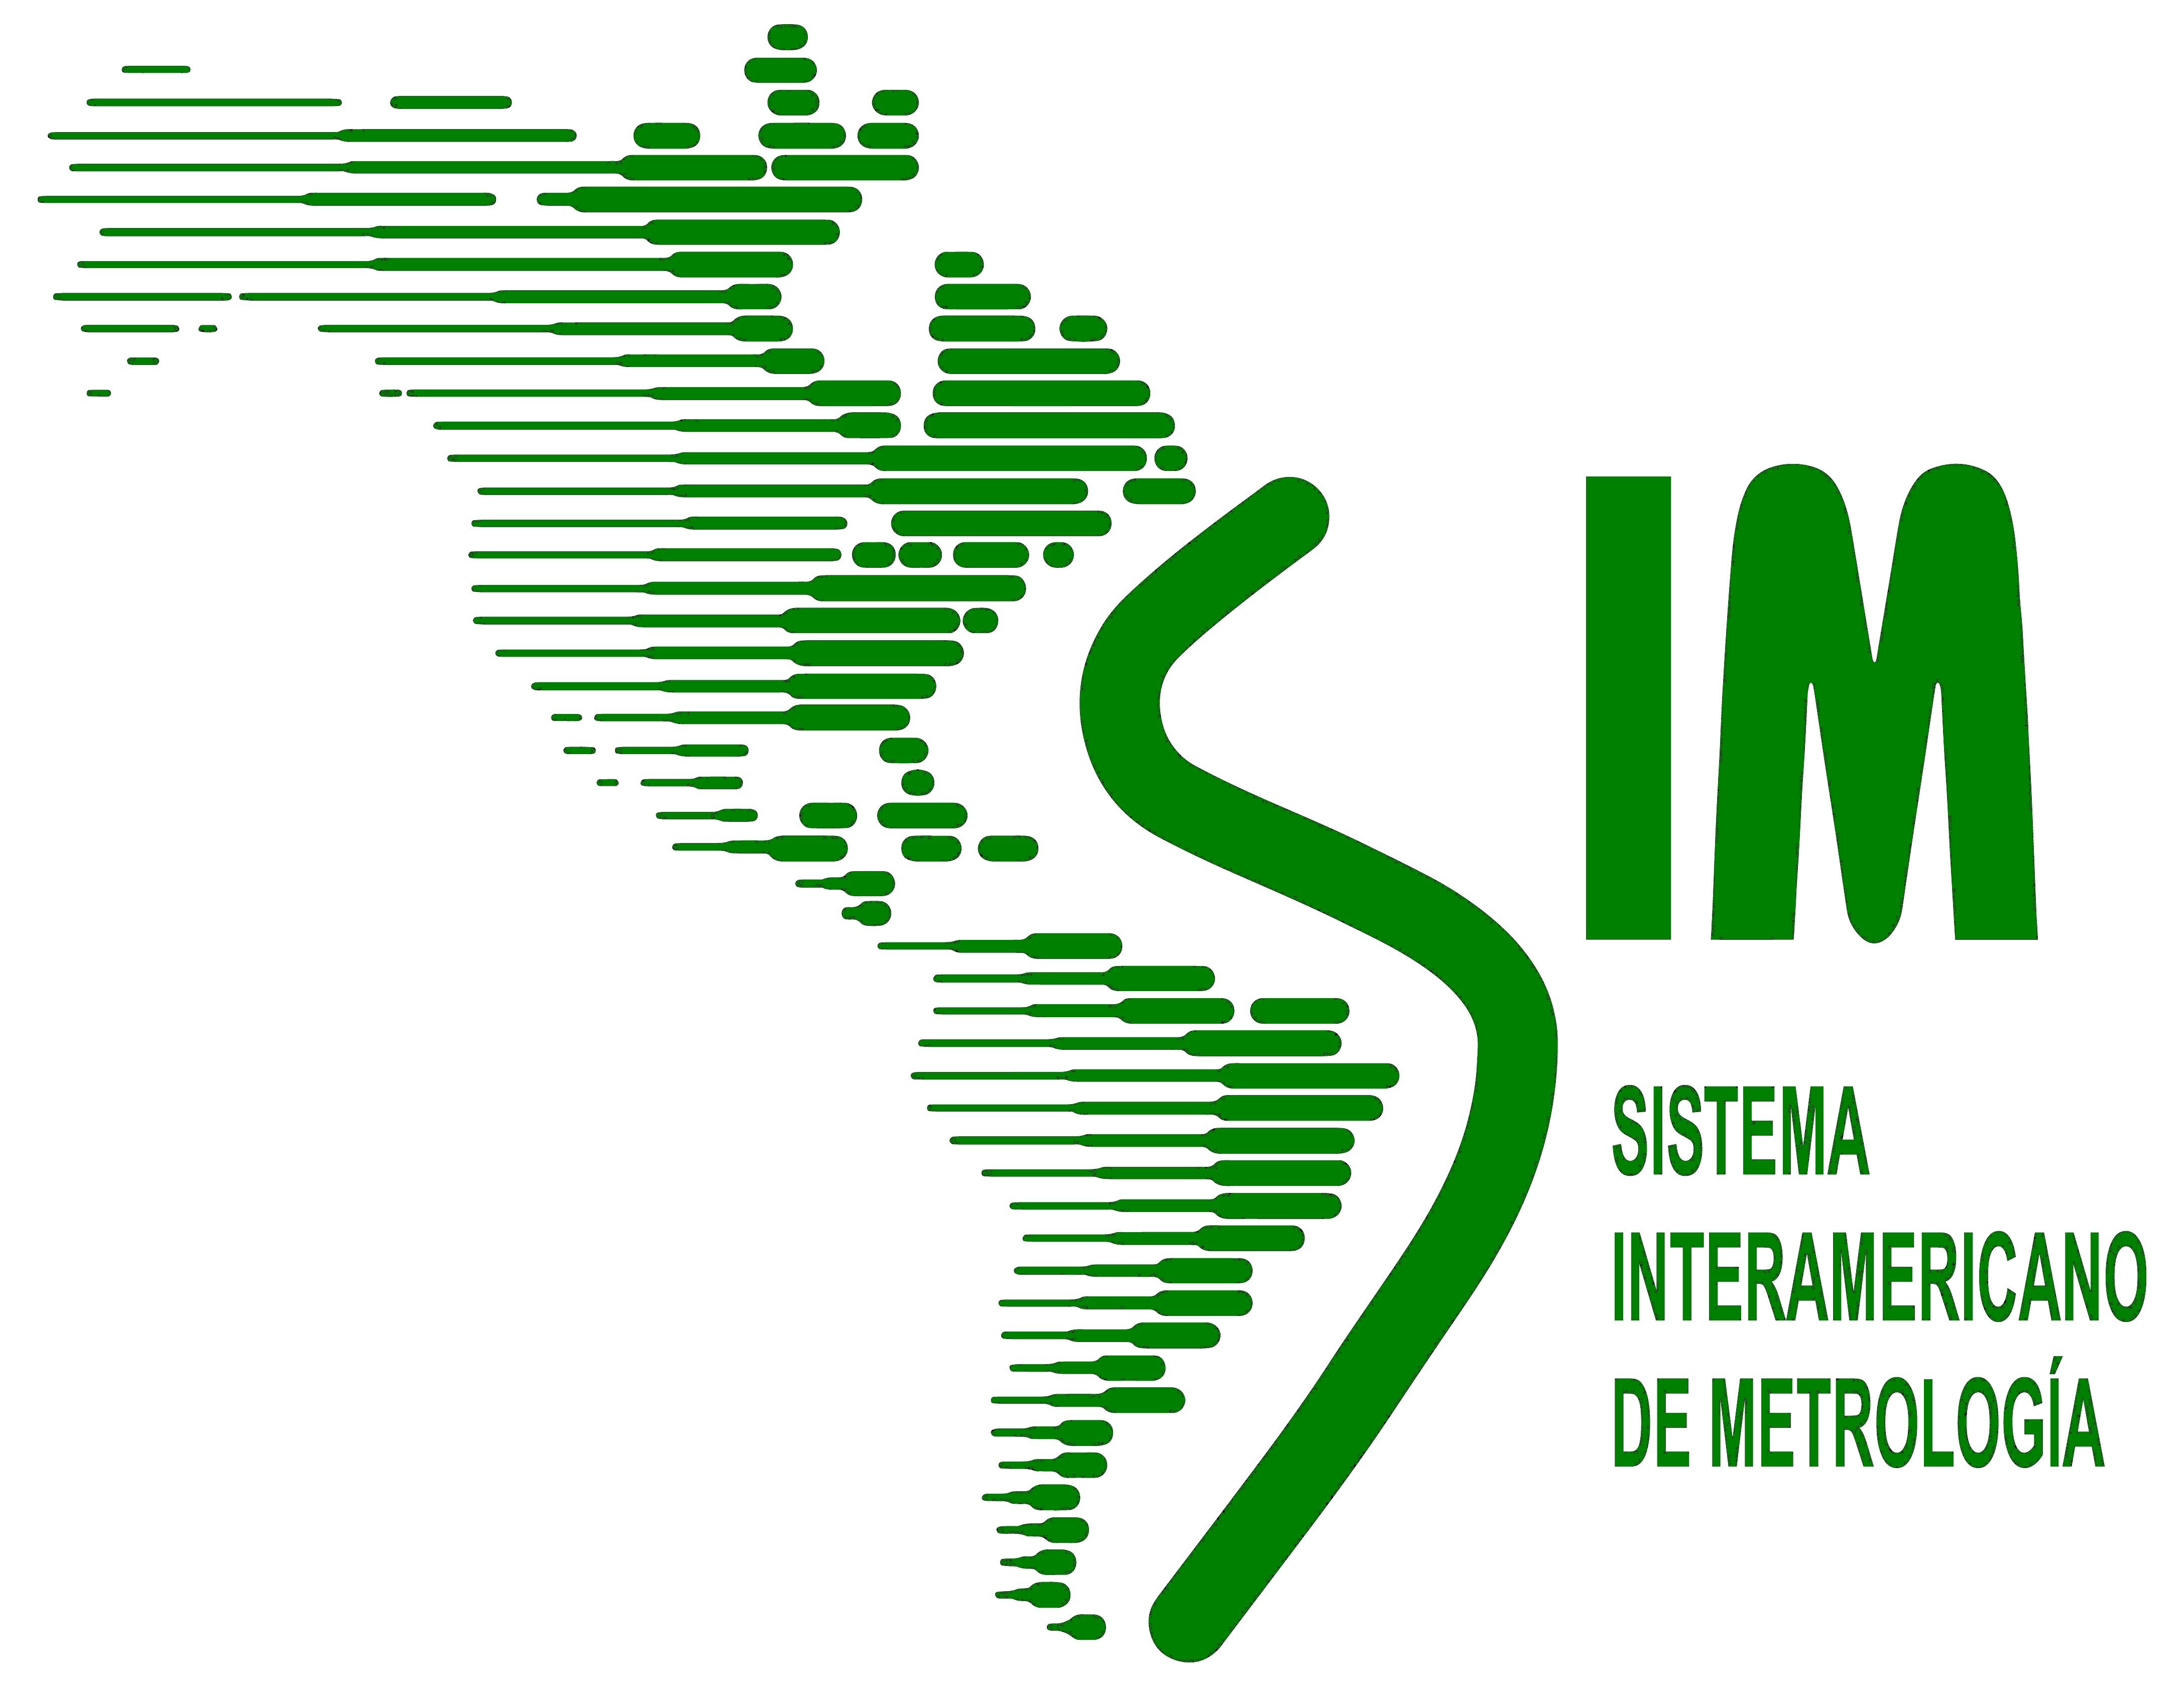 Americas - Inter-American Metrology System (SIM)